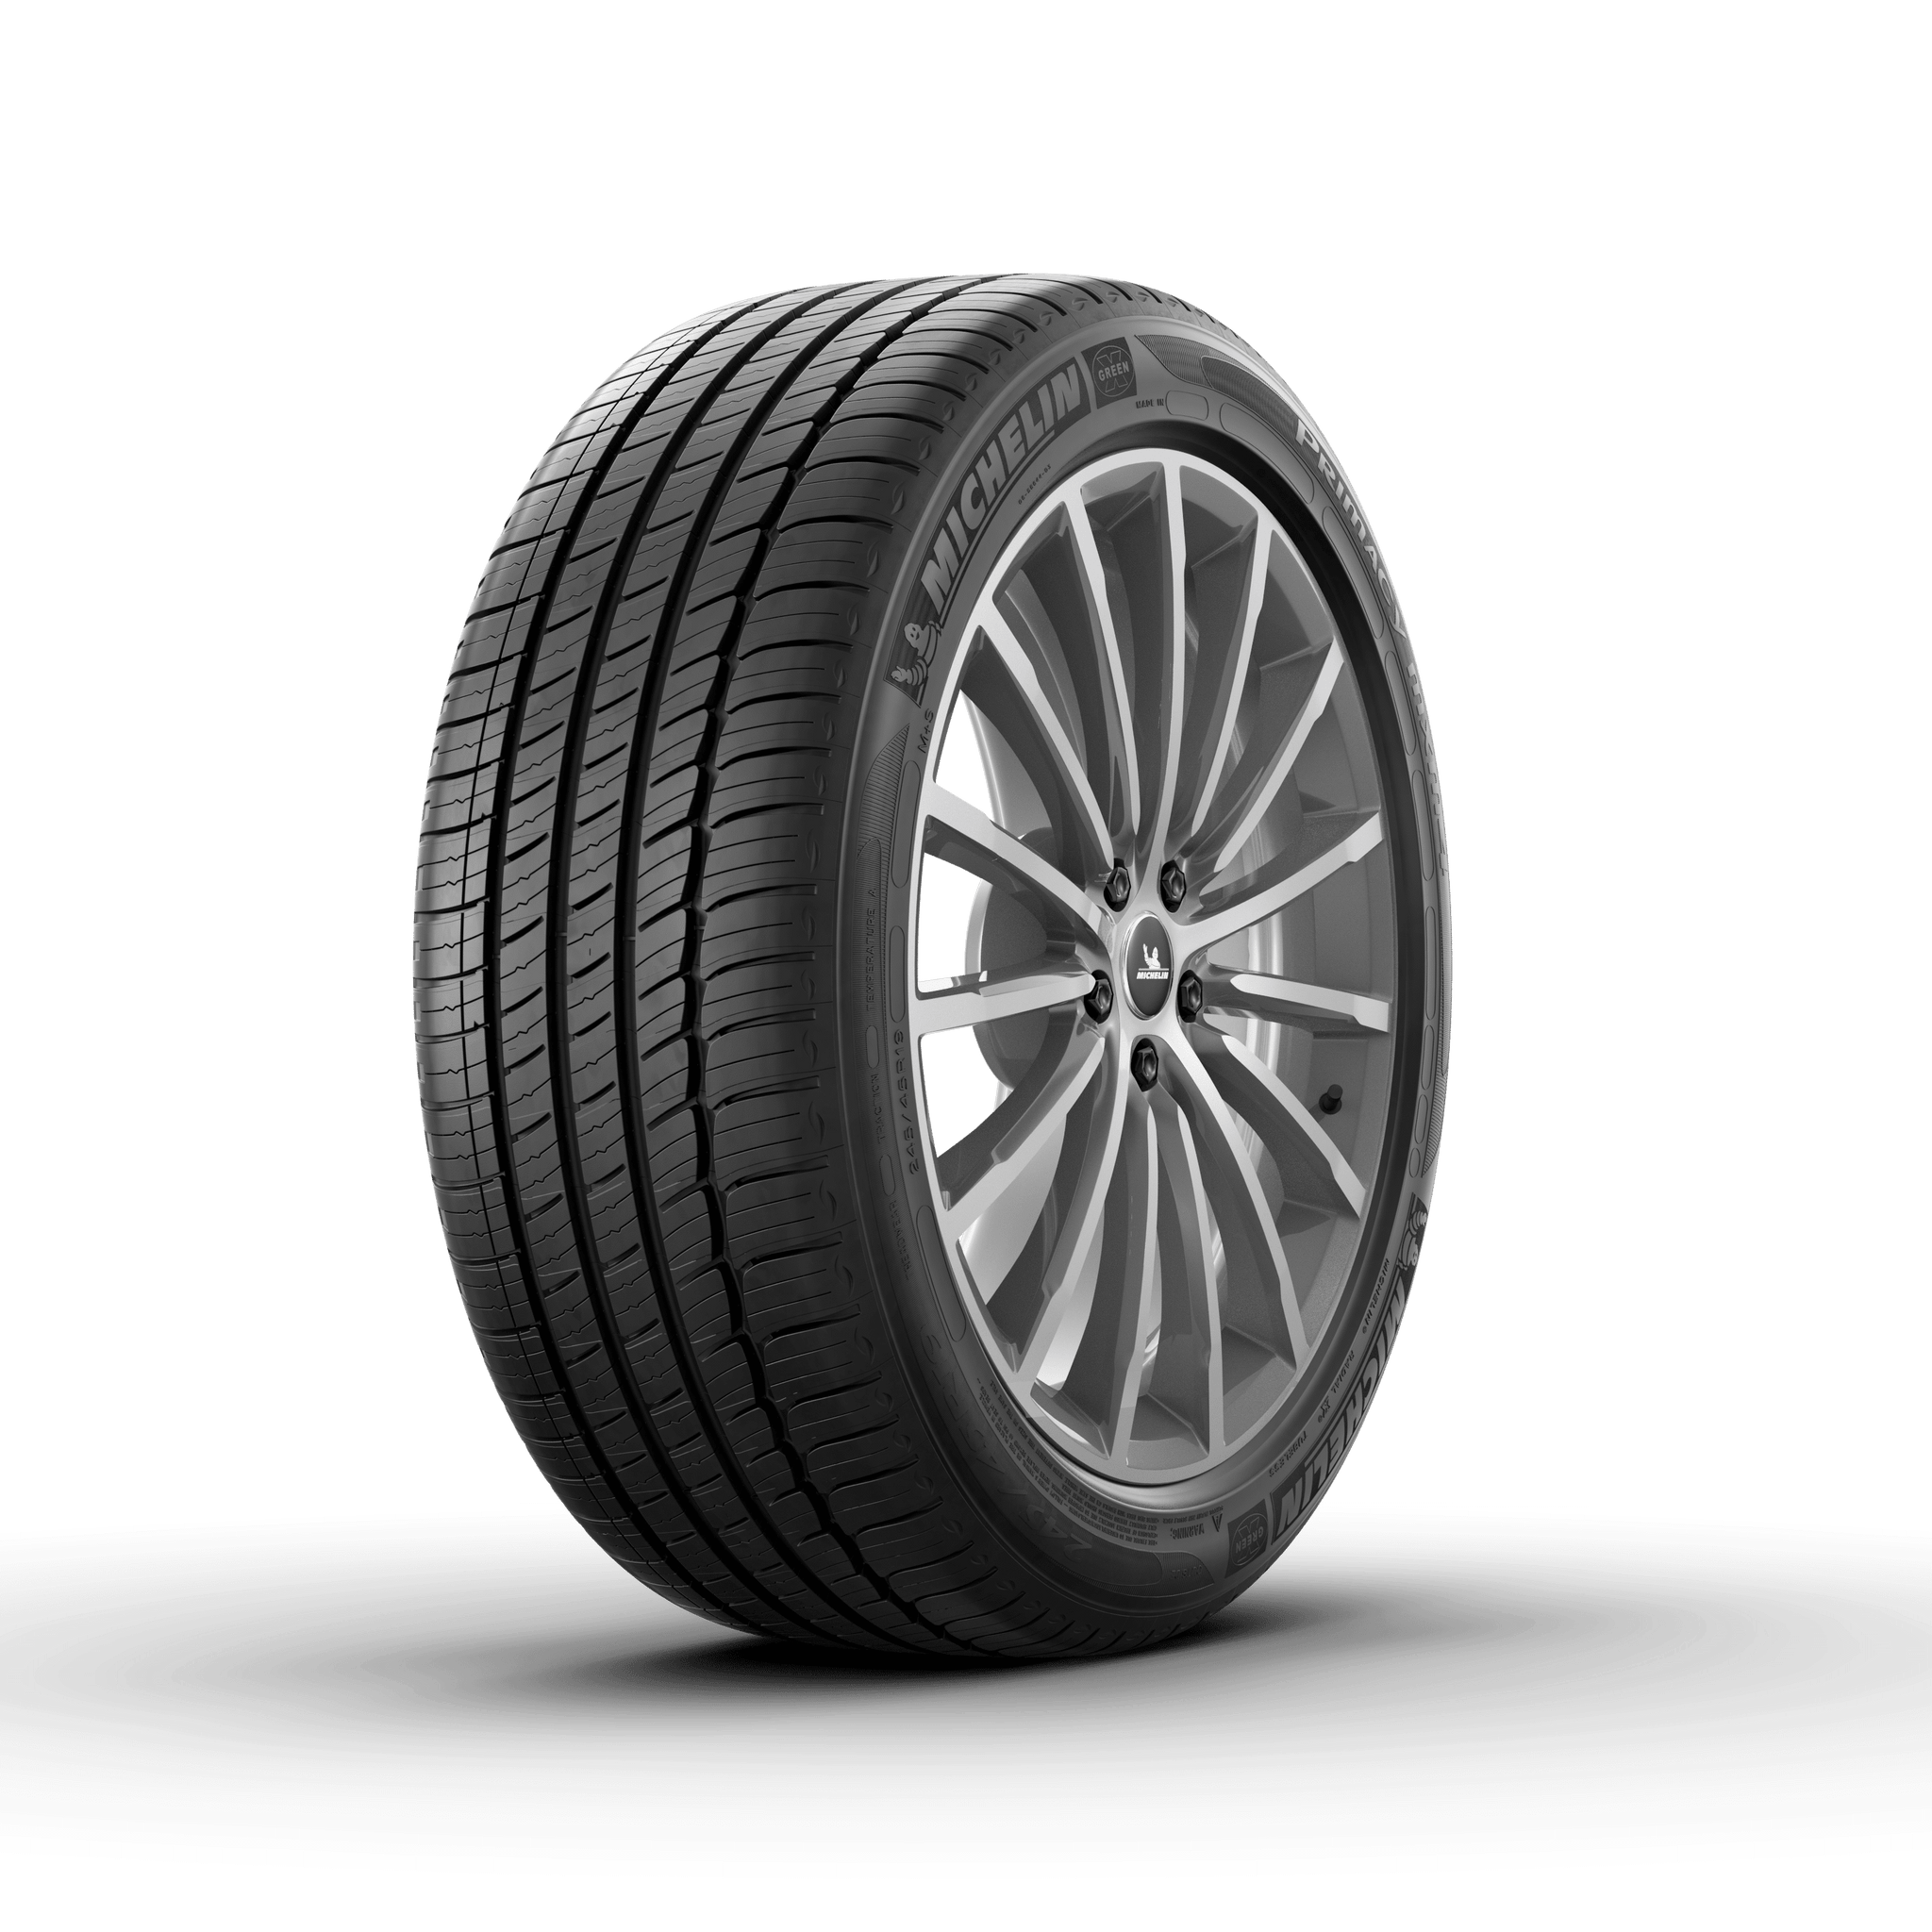 MICHELIN PRIMACY MXM4 225/45R18 (25.9X8.9R 18) Tires